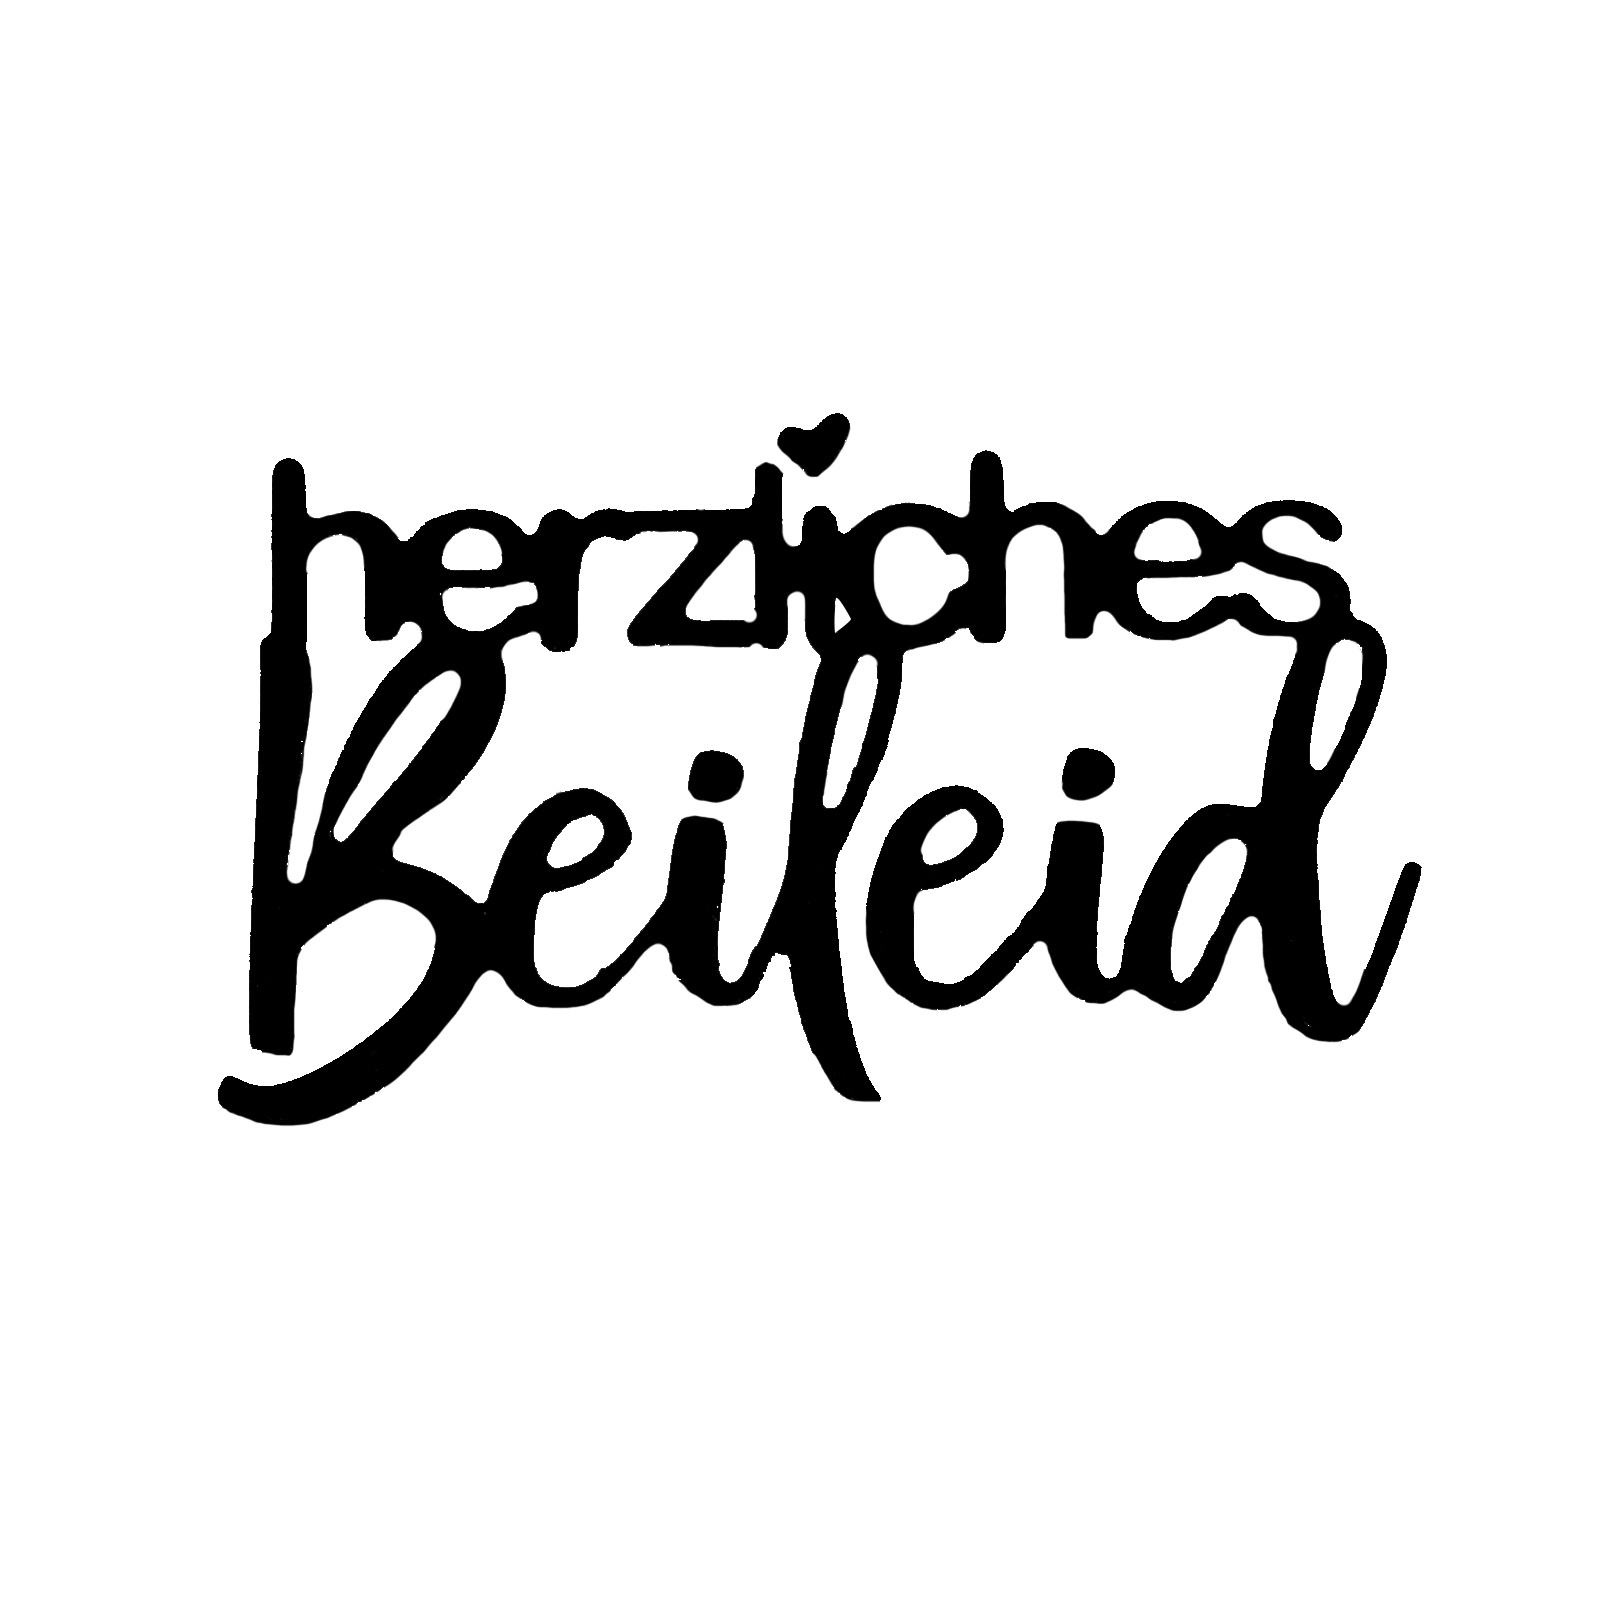 Mundart Stempel • Matrice de découpe avec texte allemand "herzliches Beileid"